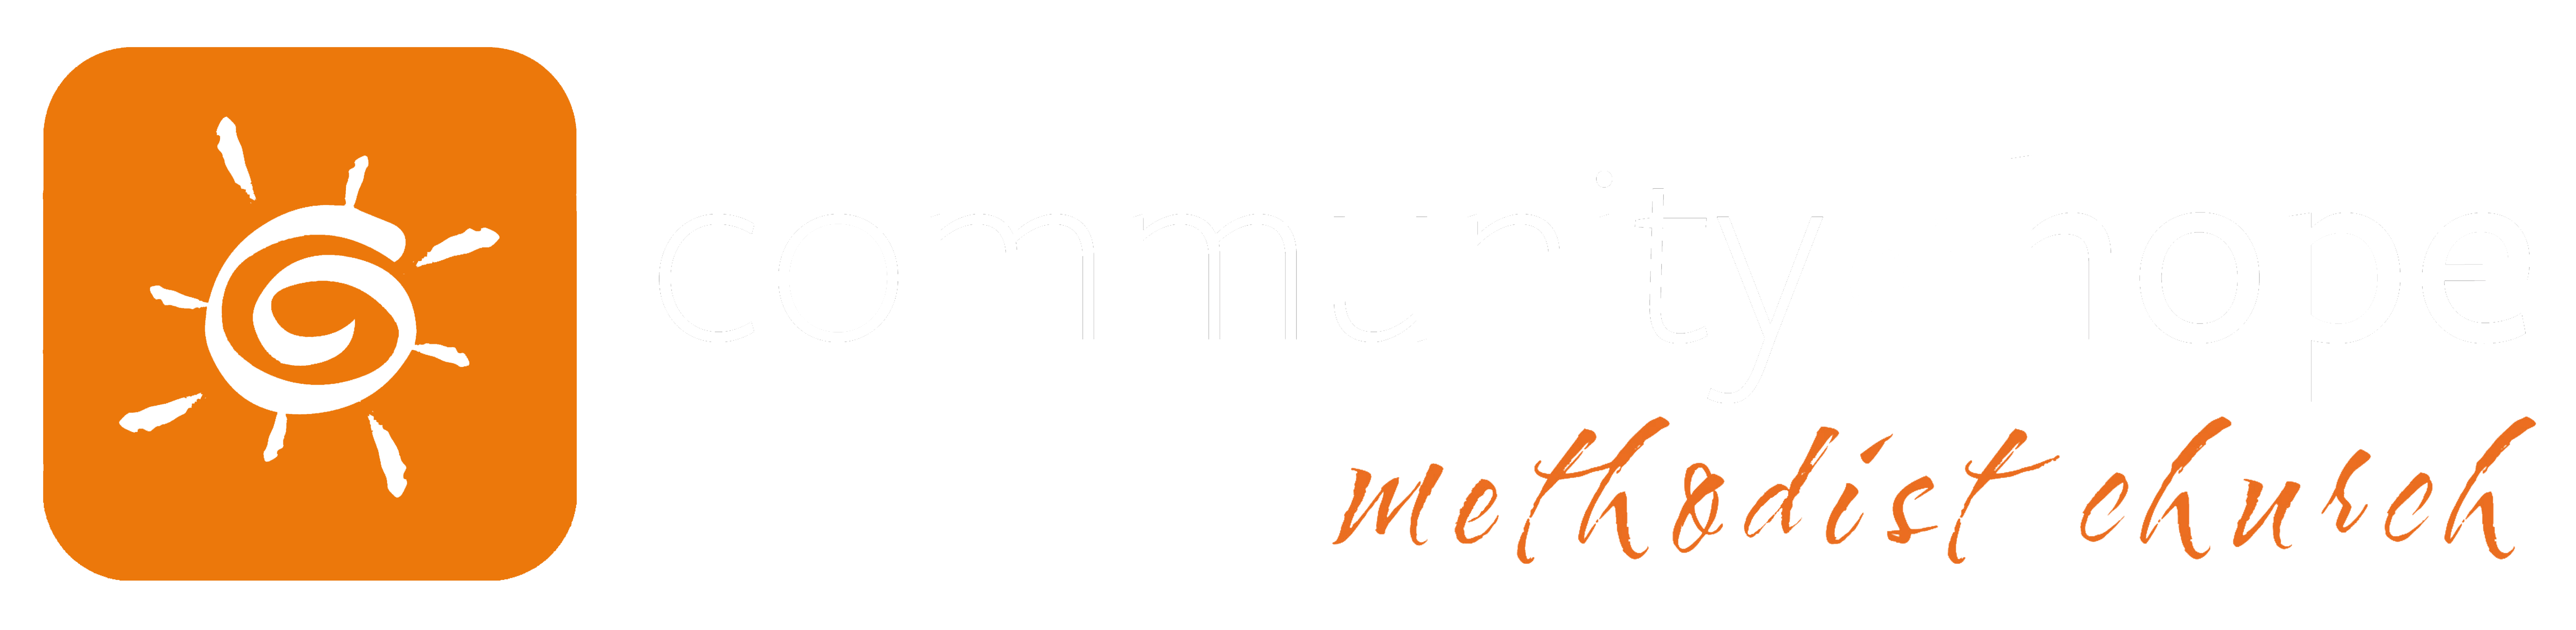 CommunityofHopeBanner - No UMC